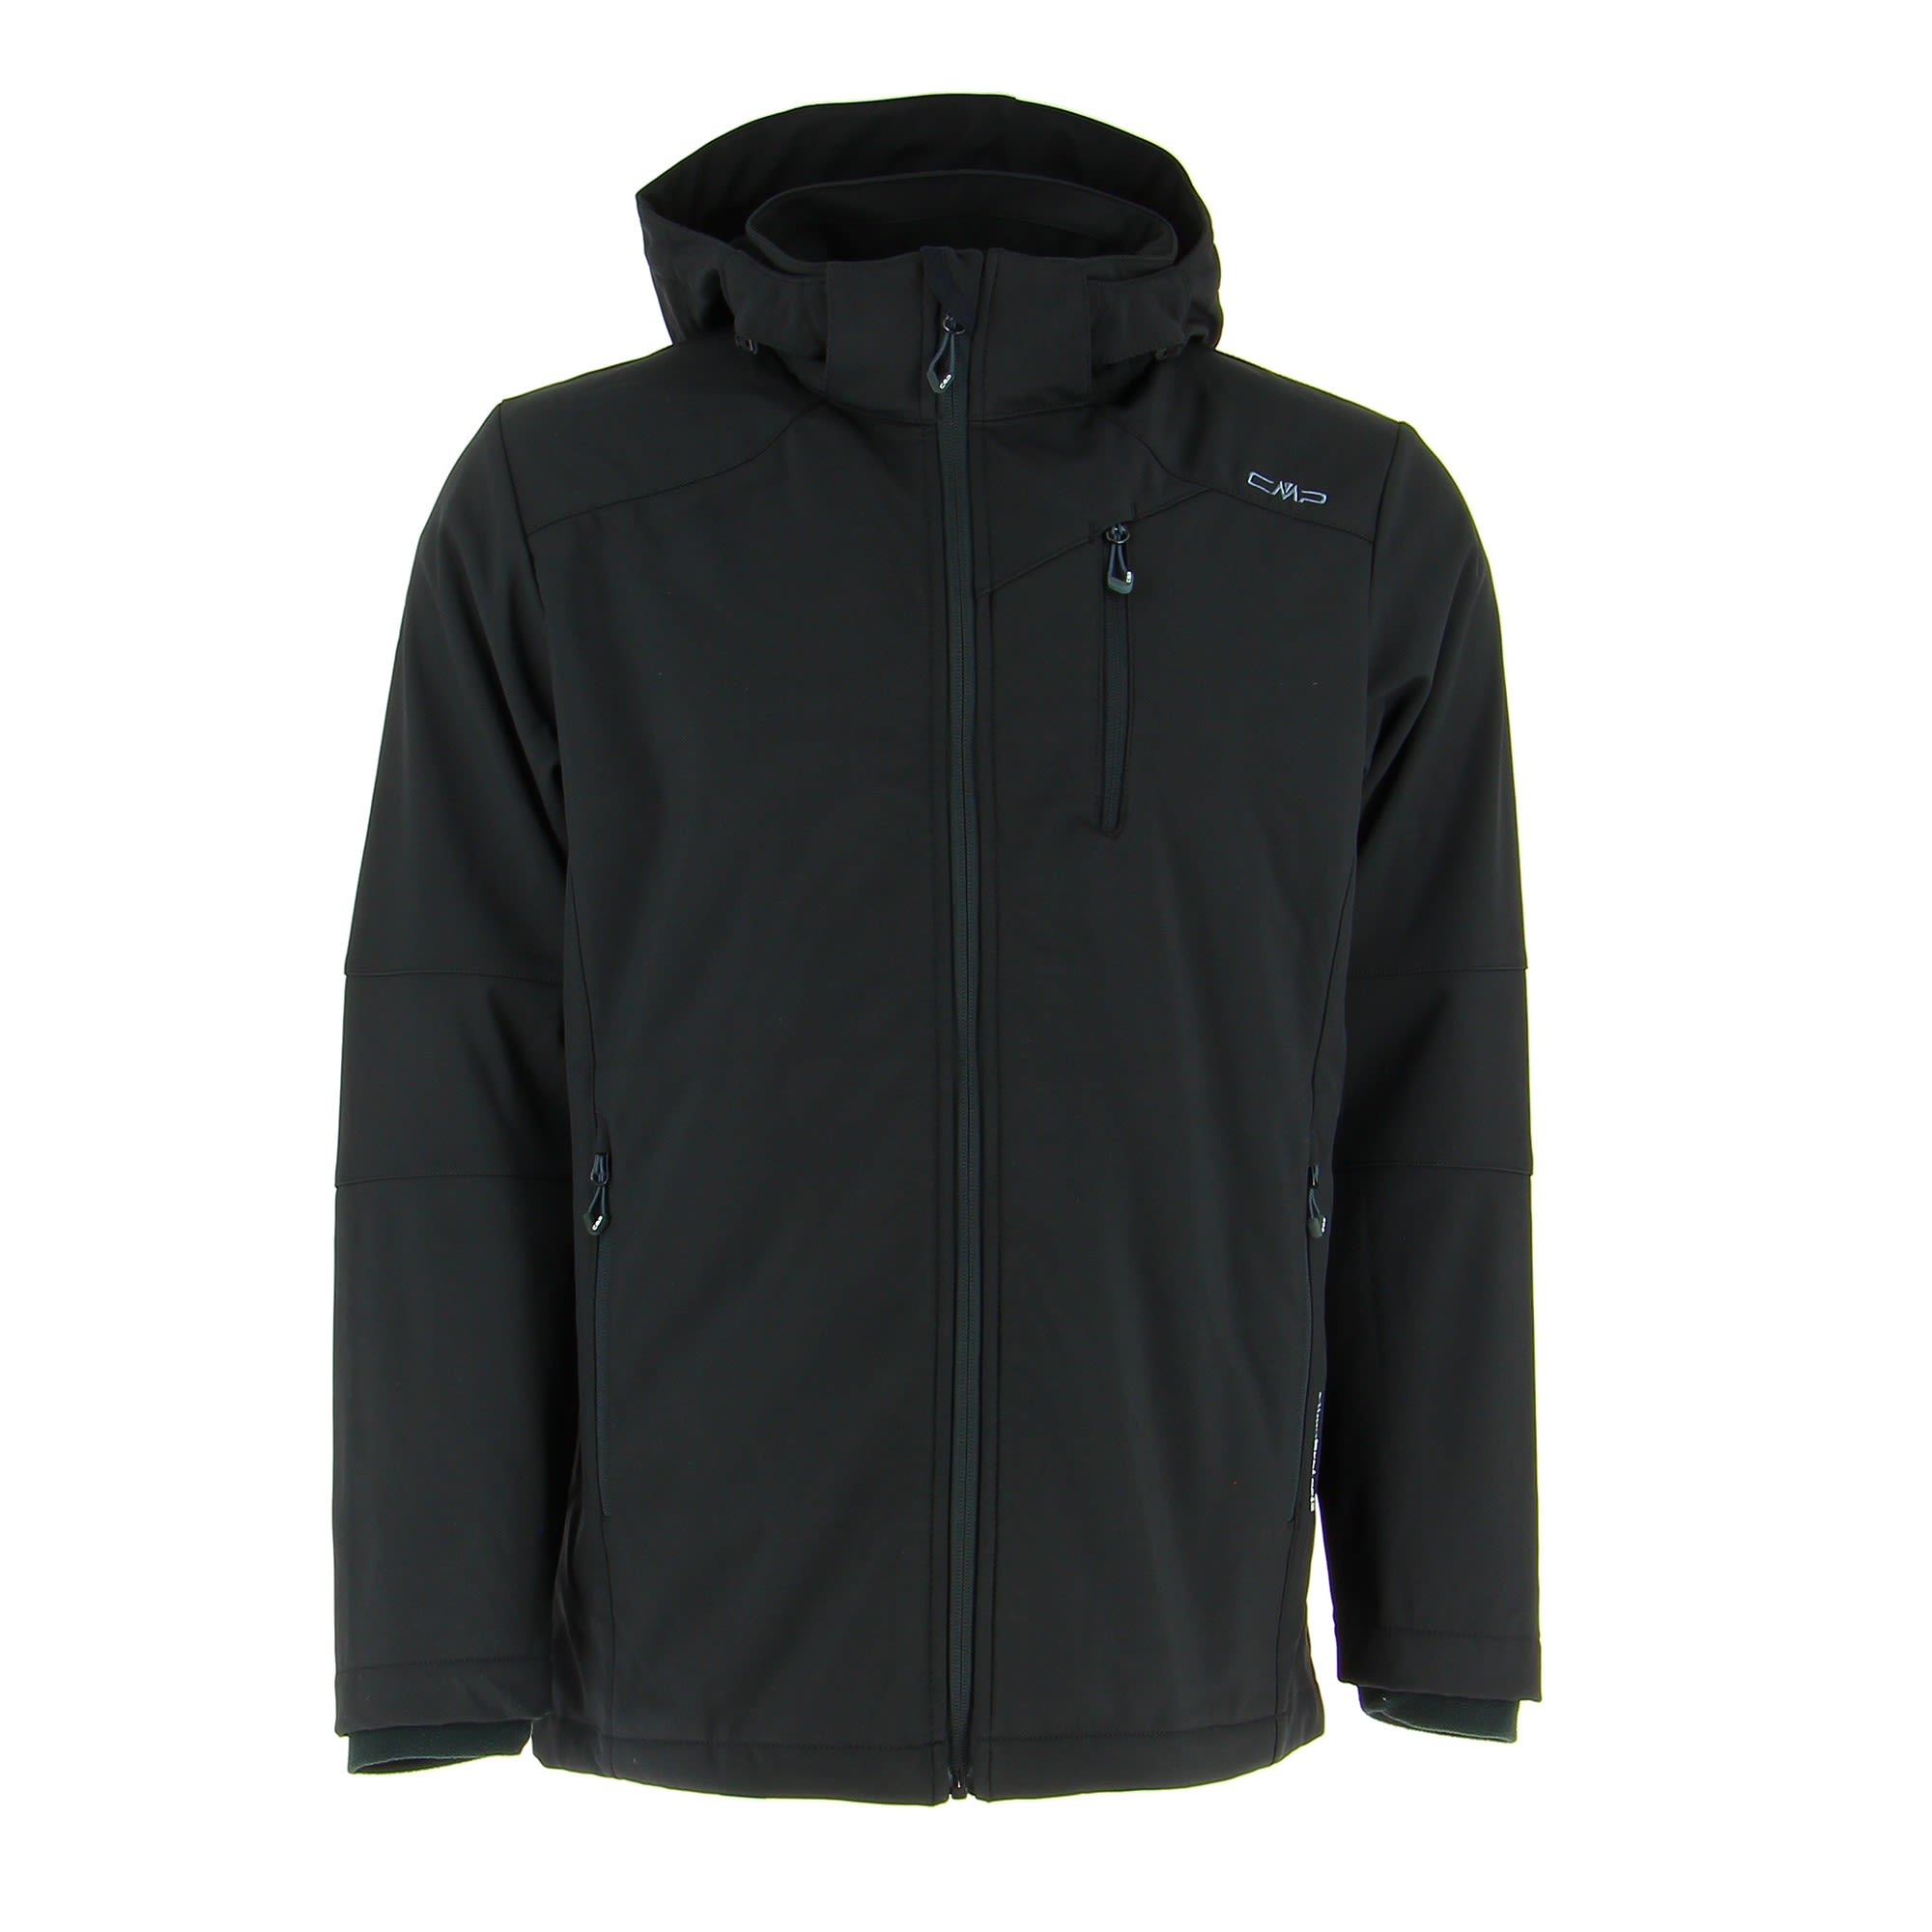 CMP Jacket Zip Hood Softshell Comfort FIt Long Male Softshelljacken- Grsse 56 - Farbe Nero unter CMP